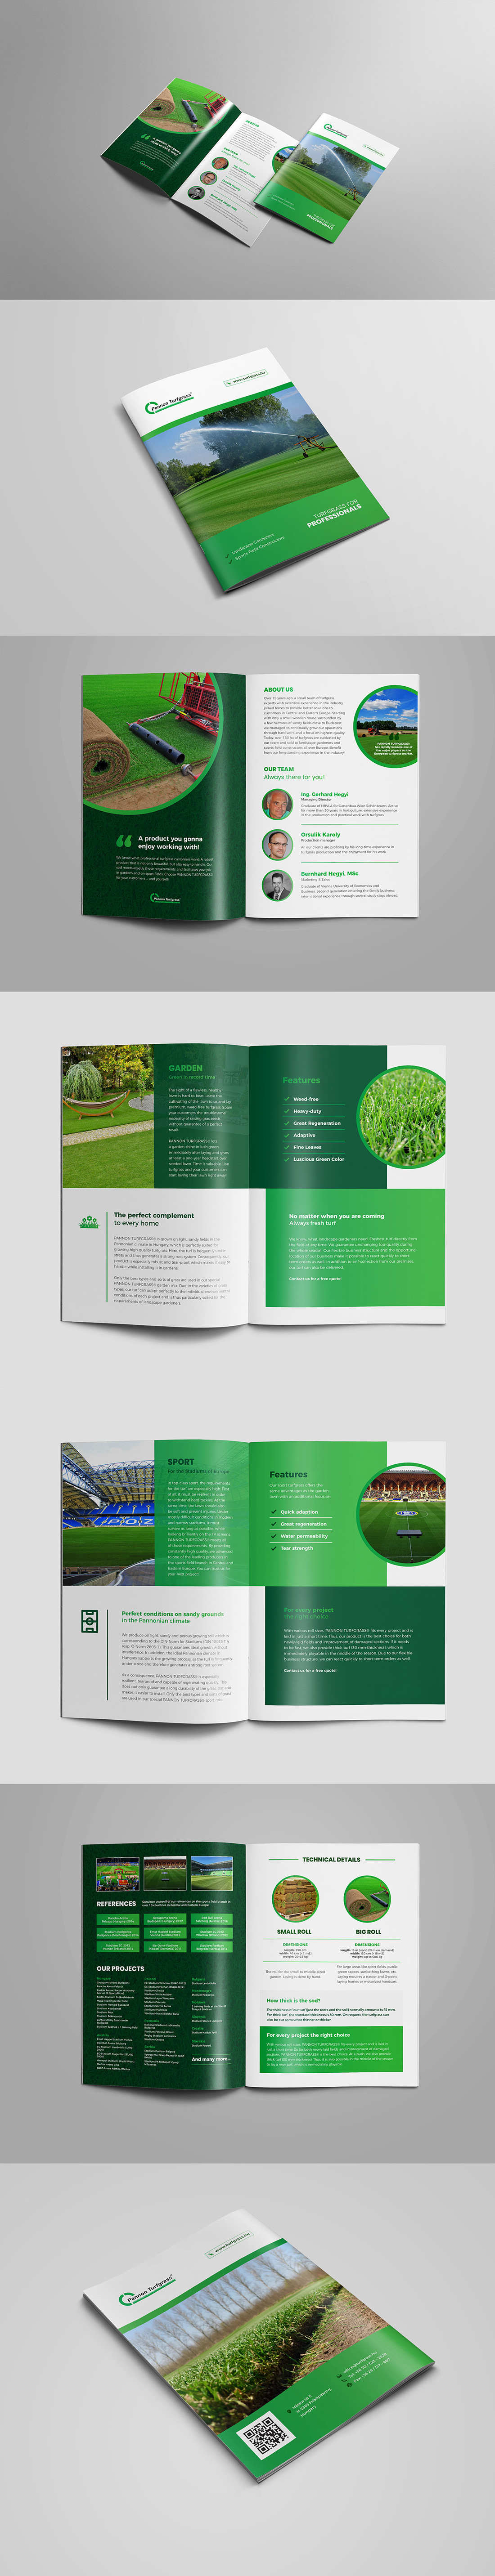 TURF GRASS Brochure brochure design Adobe InDesign